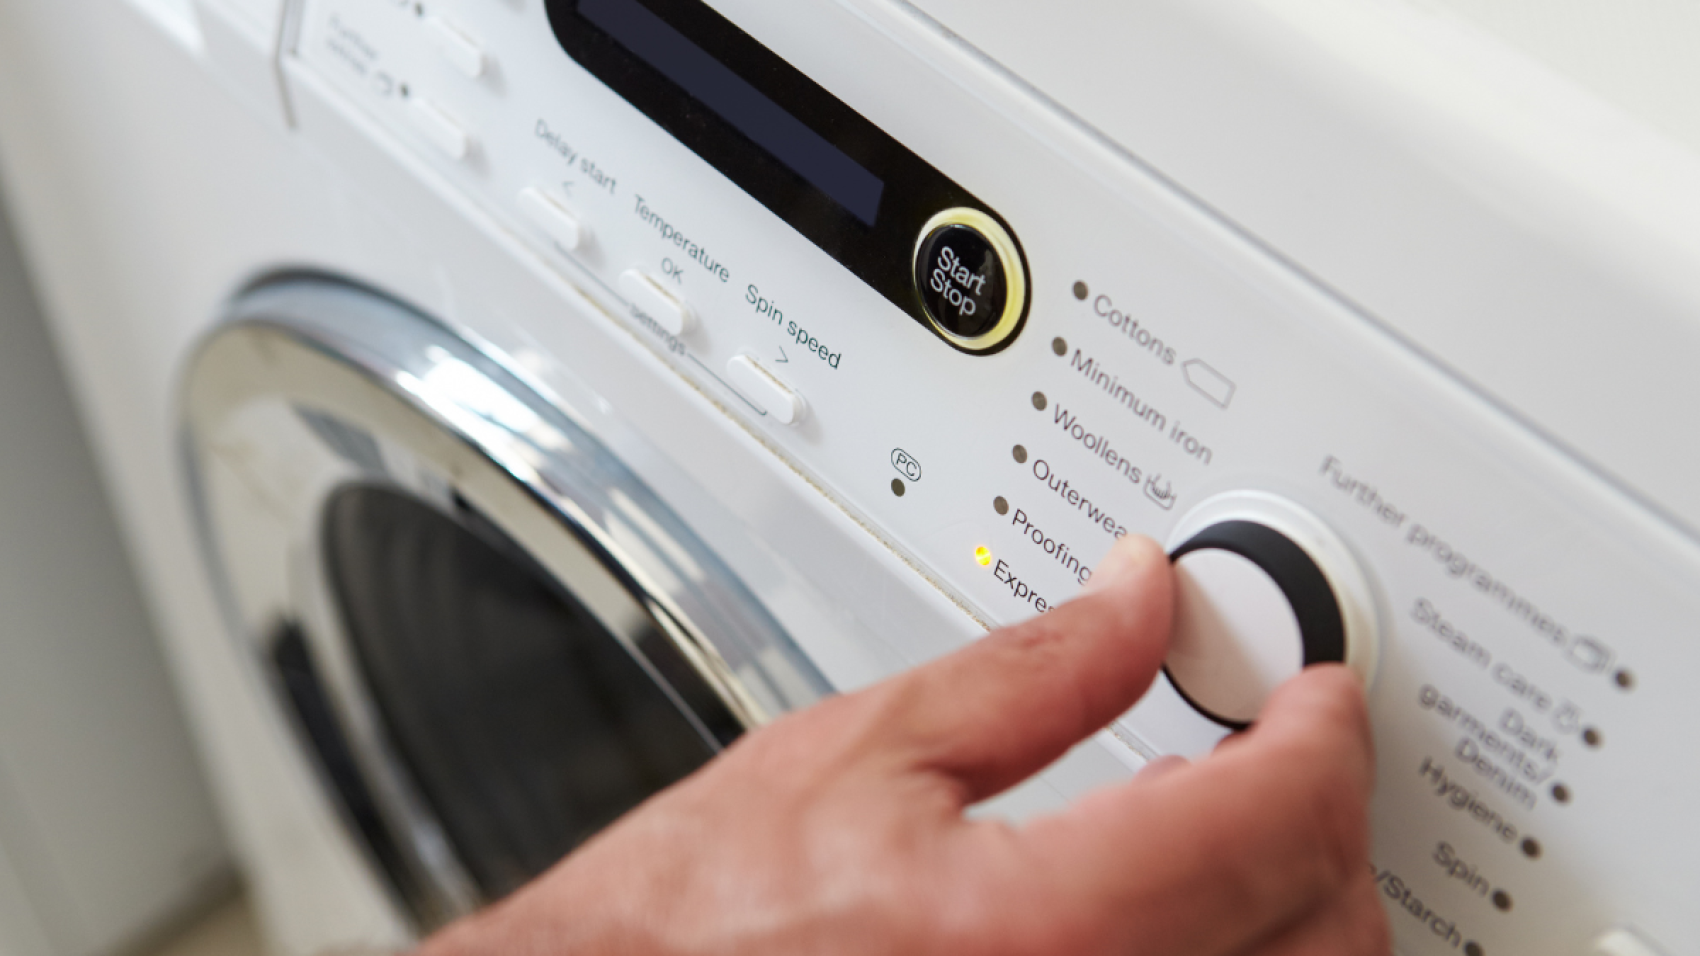 The Washing Machine Won't Drain or Spin